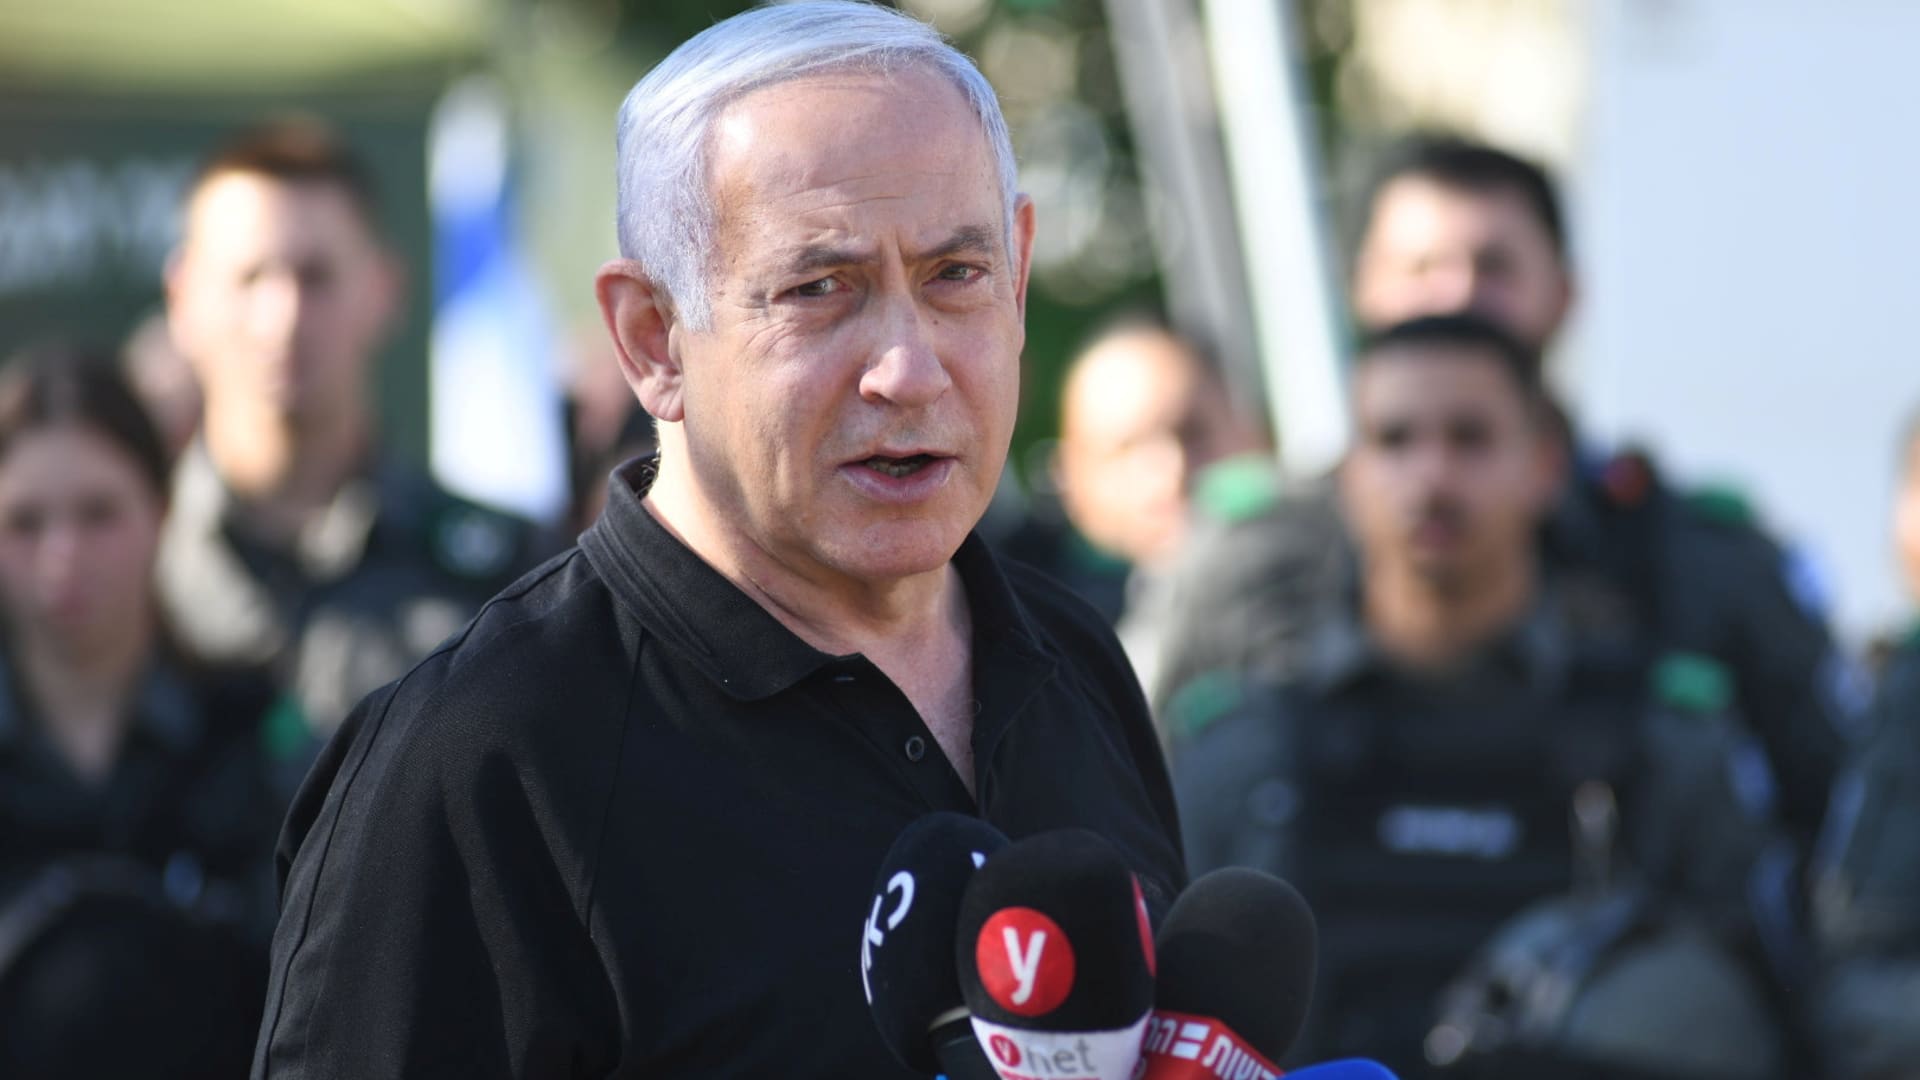 Israeli Prime Minister Benjamin Netanyahu speaks during meeting with Israeli border police following violence in the Arab-Jewish town of Lod, Israel May 13, 2021.